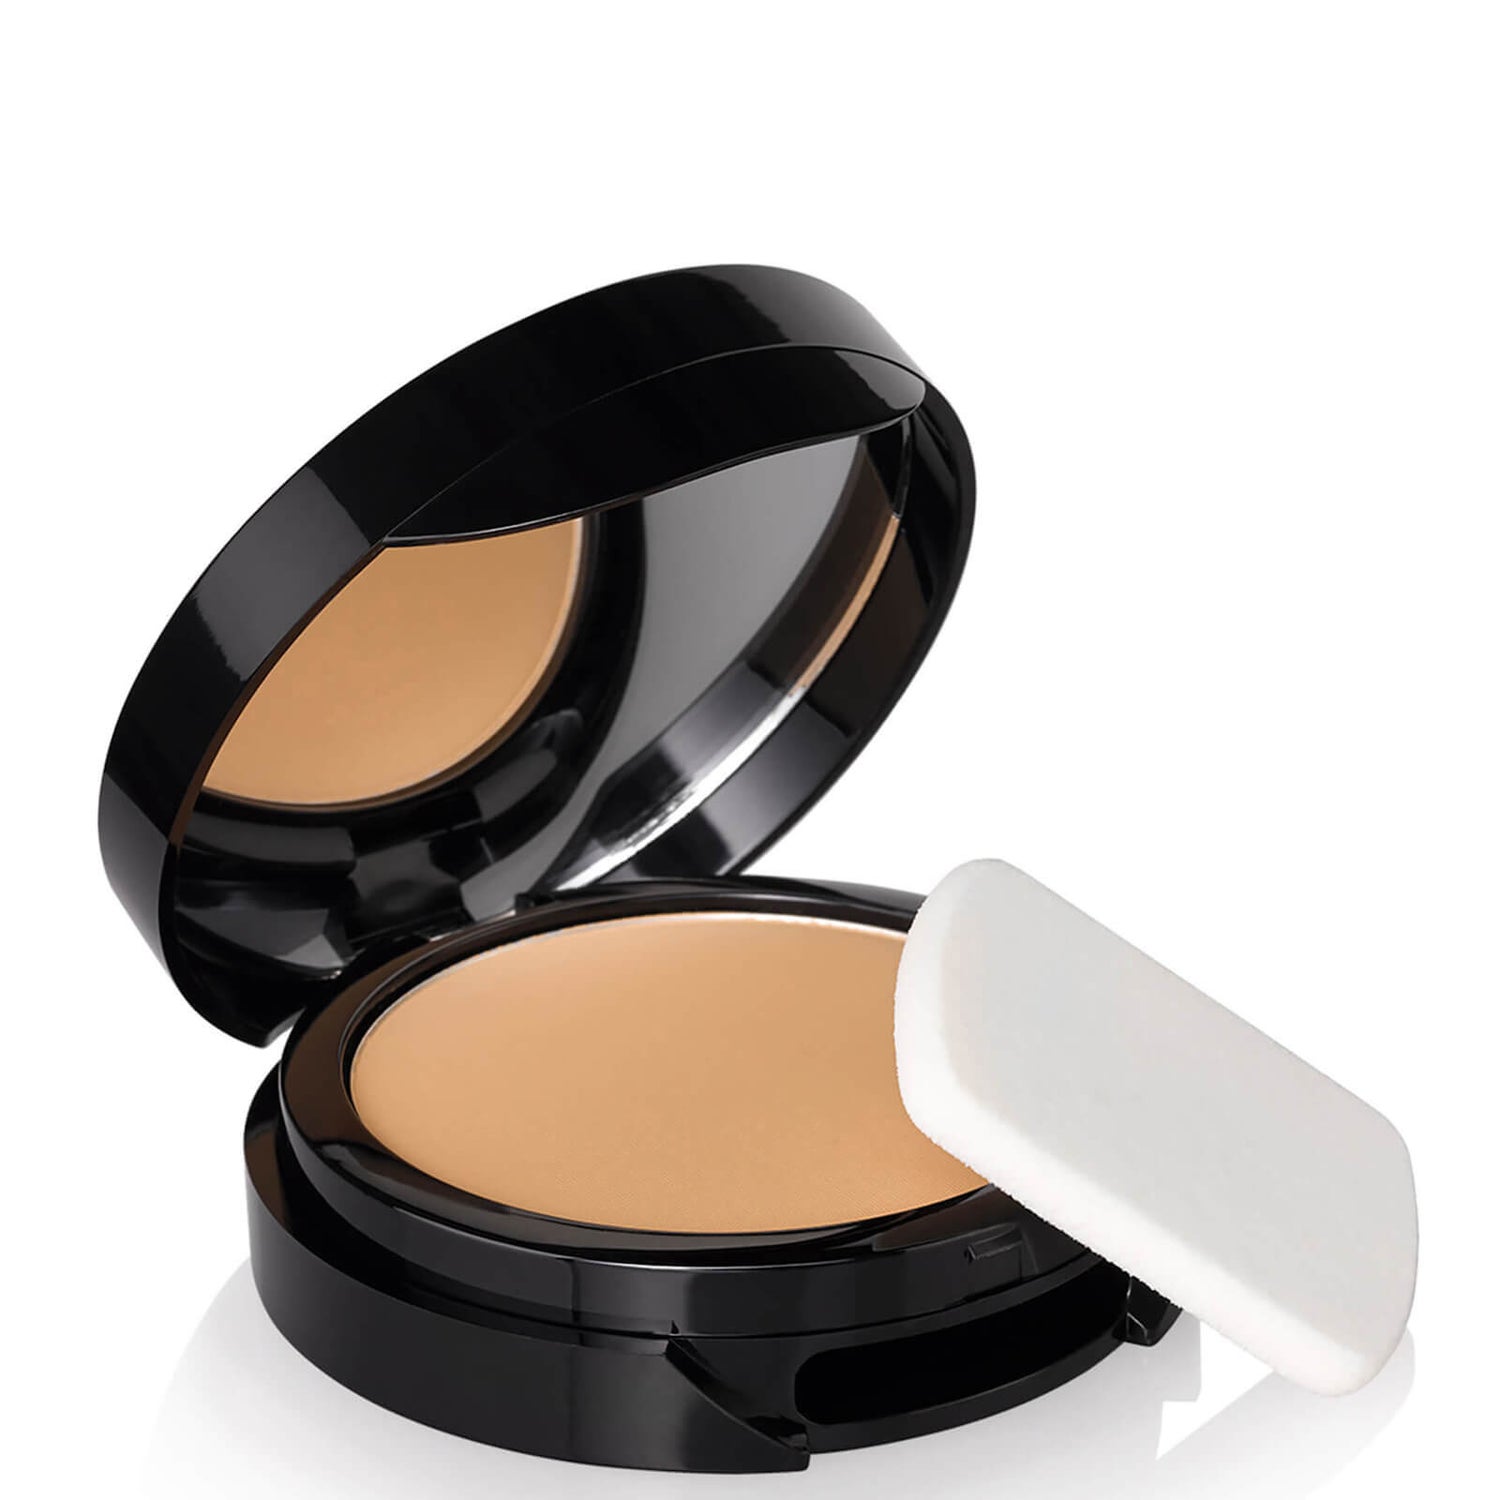 EX1 Cosmetics Compact Powder 9.5 g (ulike nyanser)